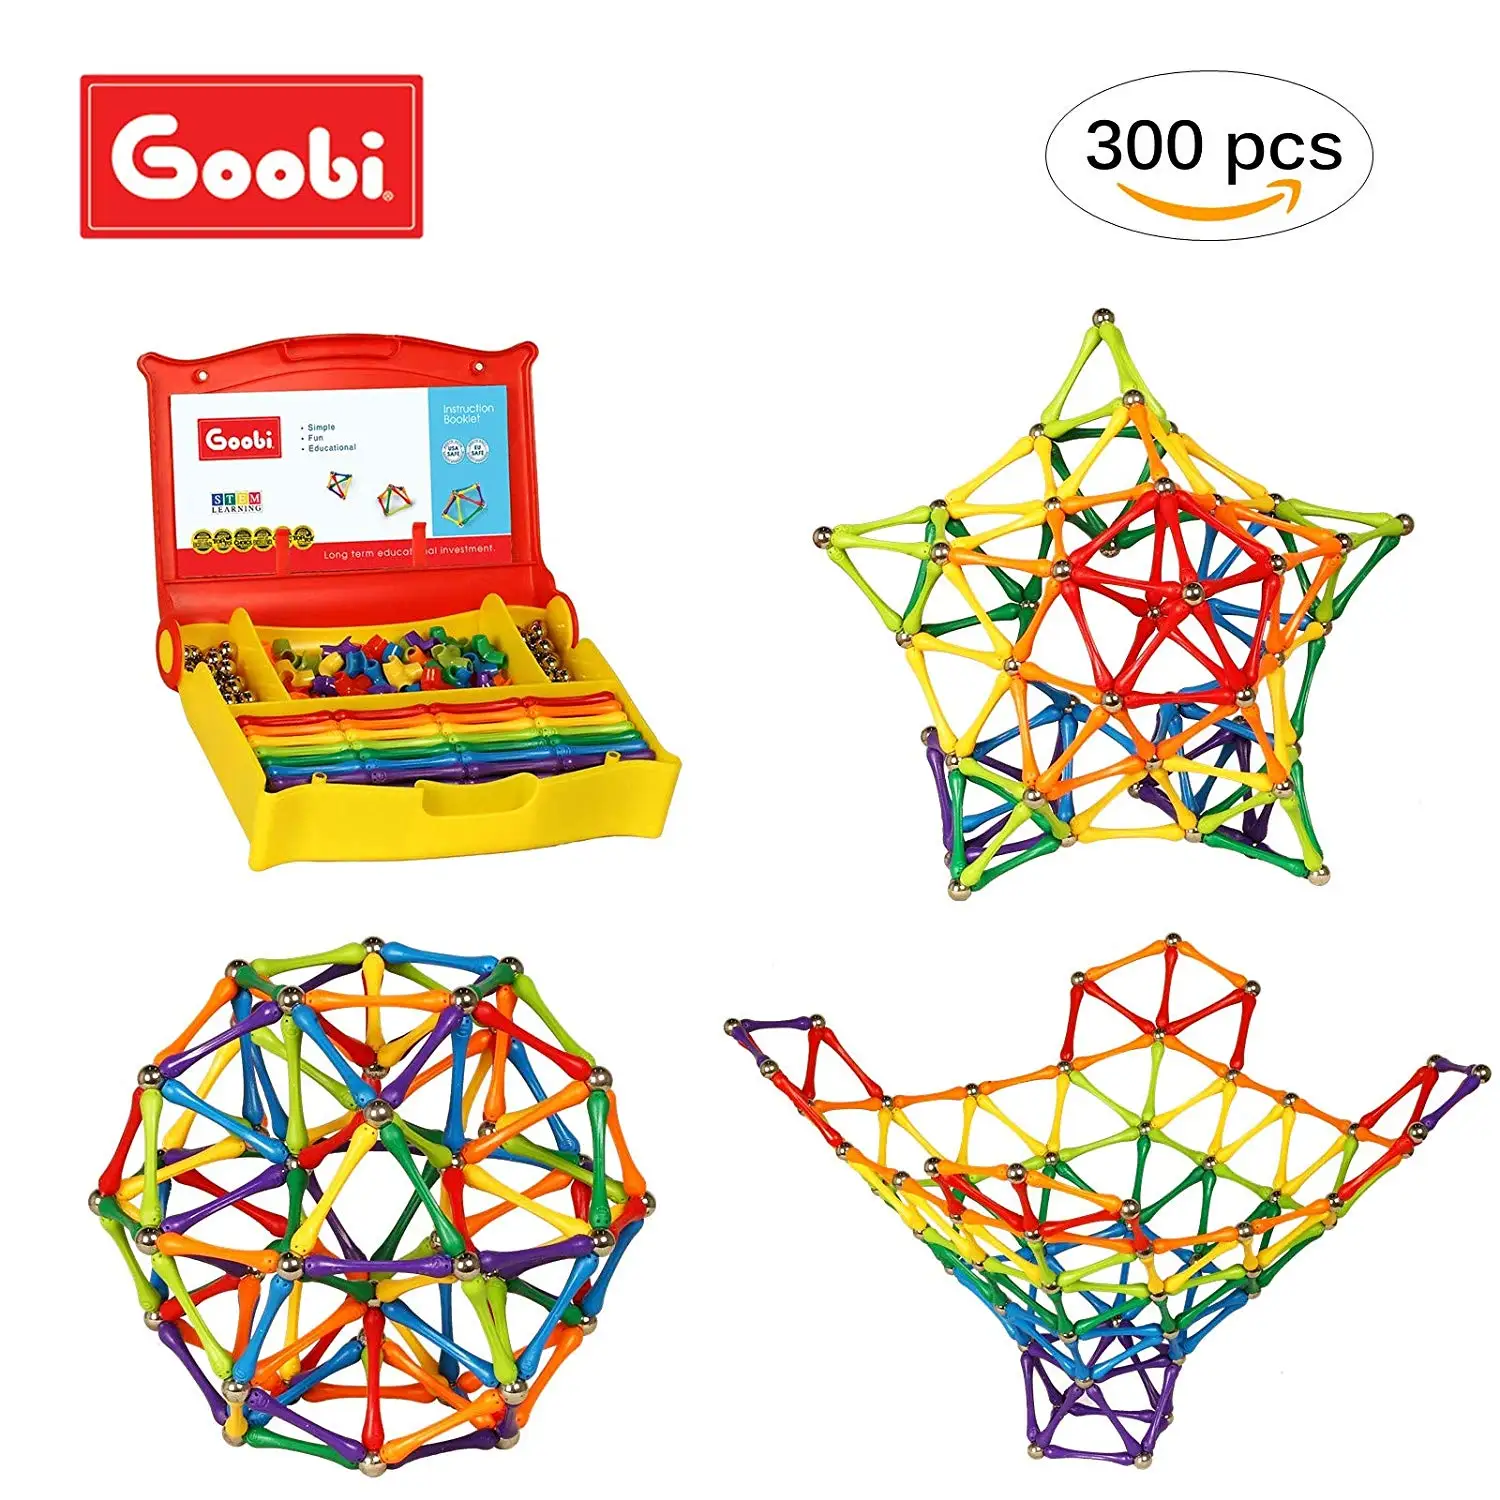 Goobi 70 Piece Construction Set Building Toy Active Play Sticks STEM Learni...